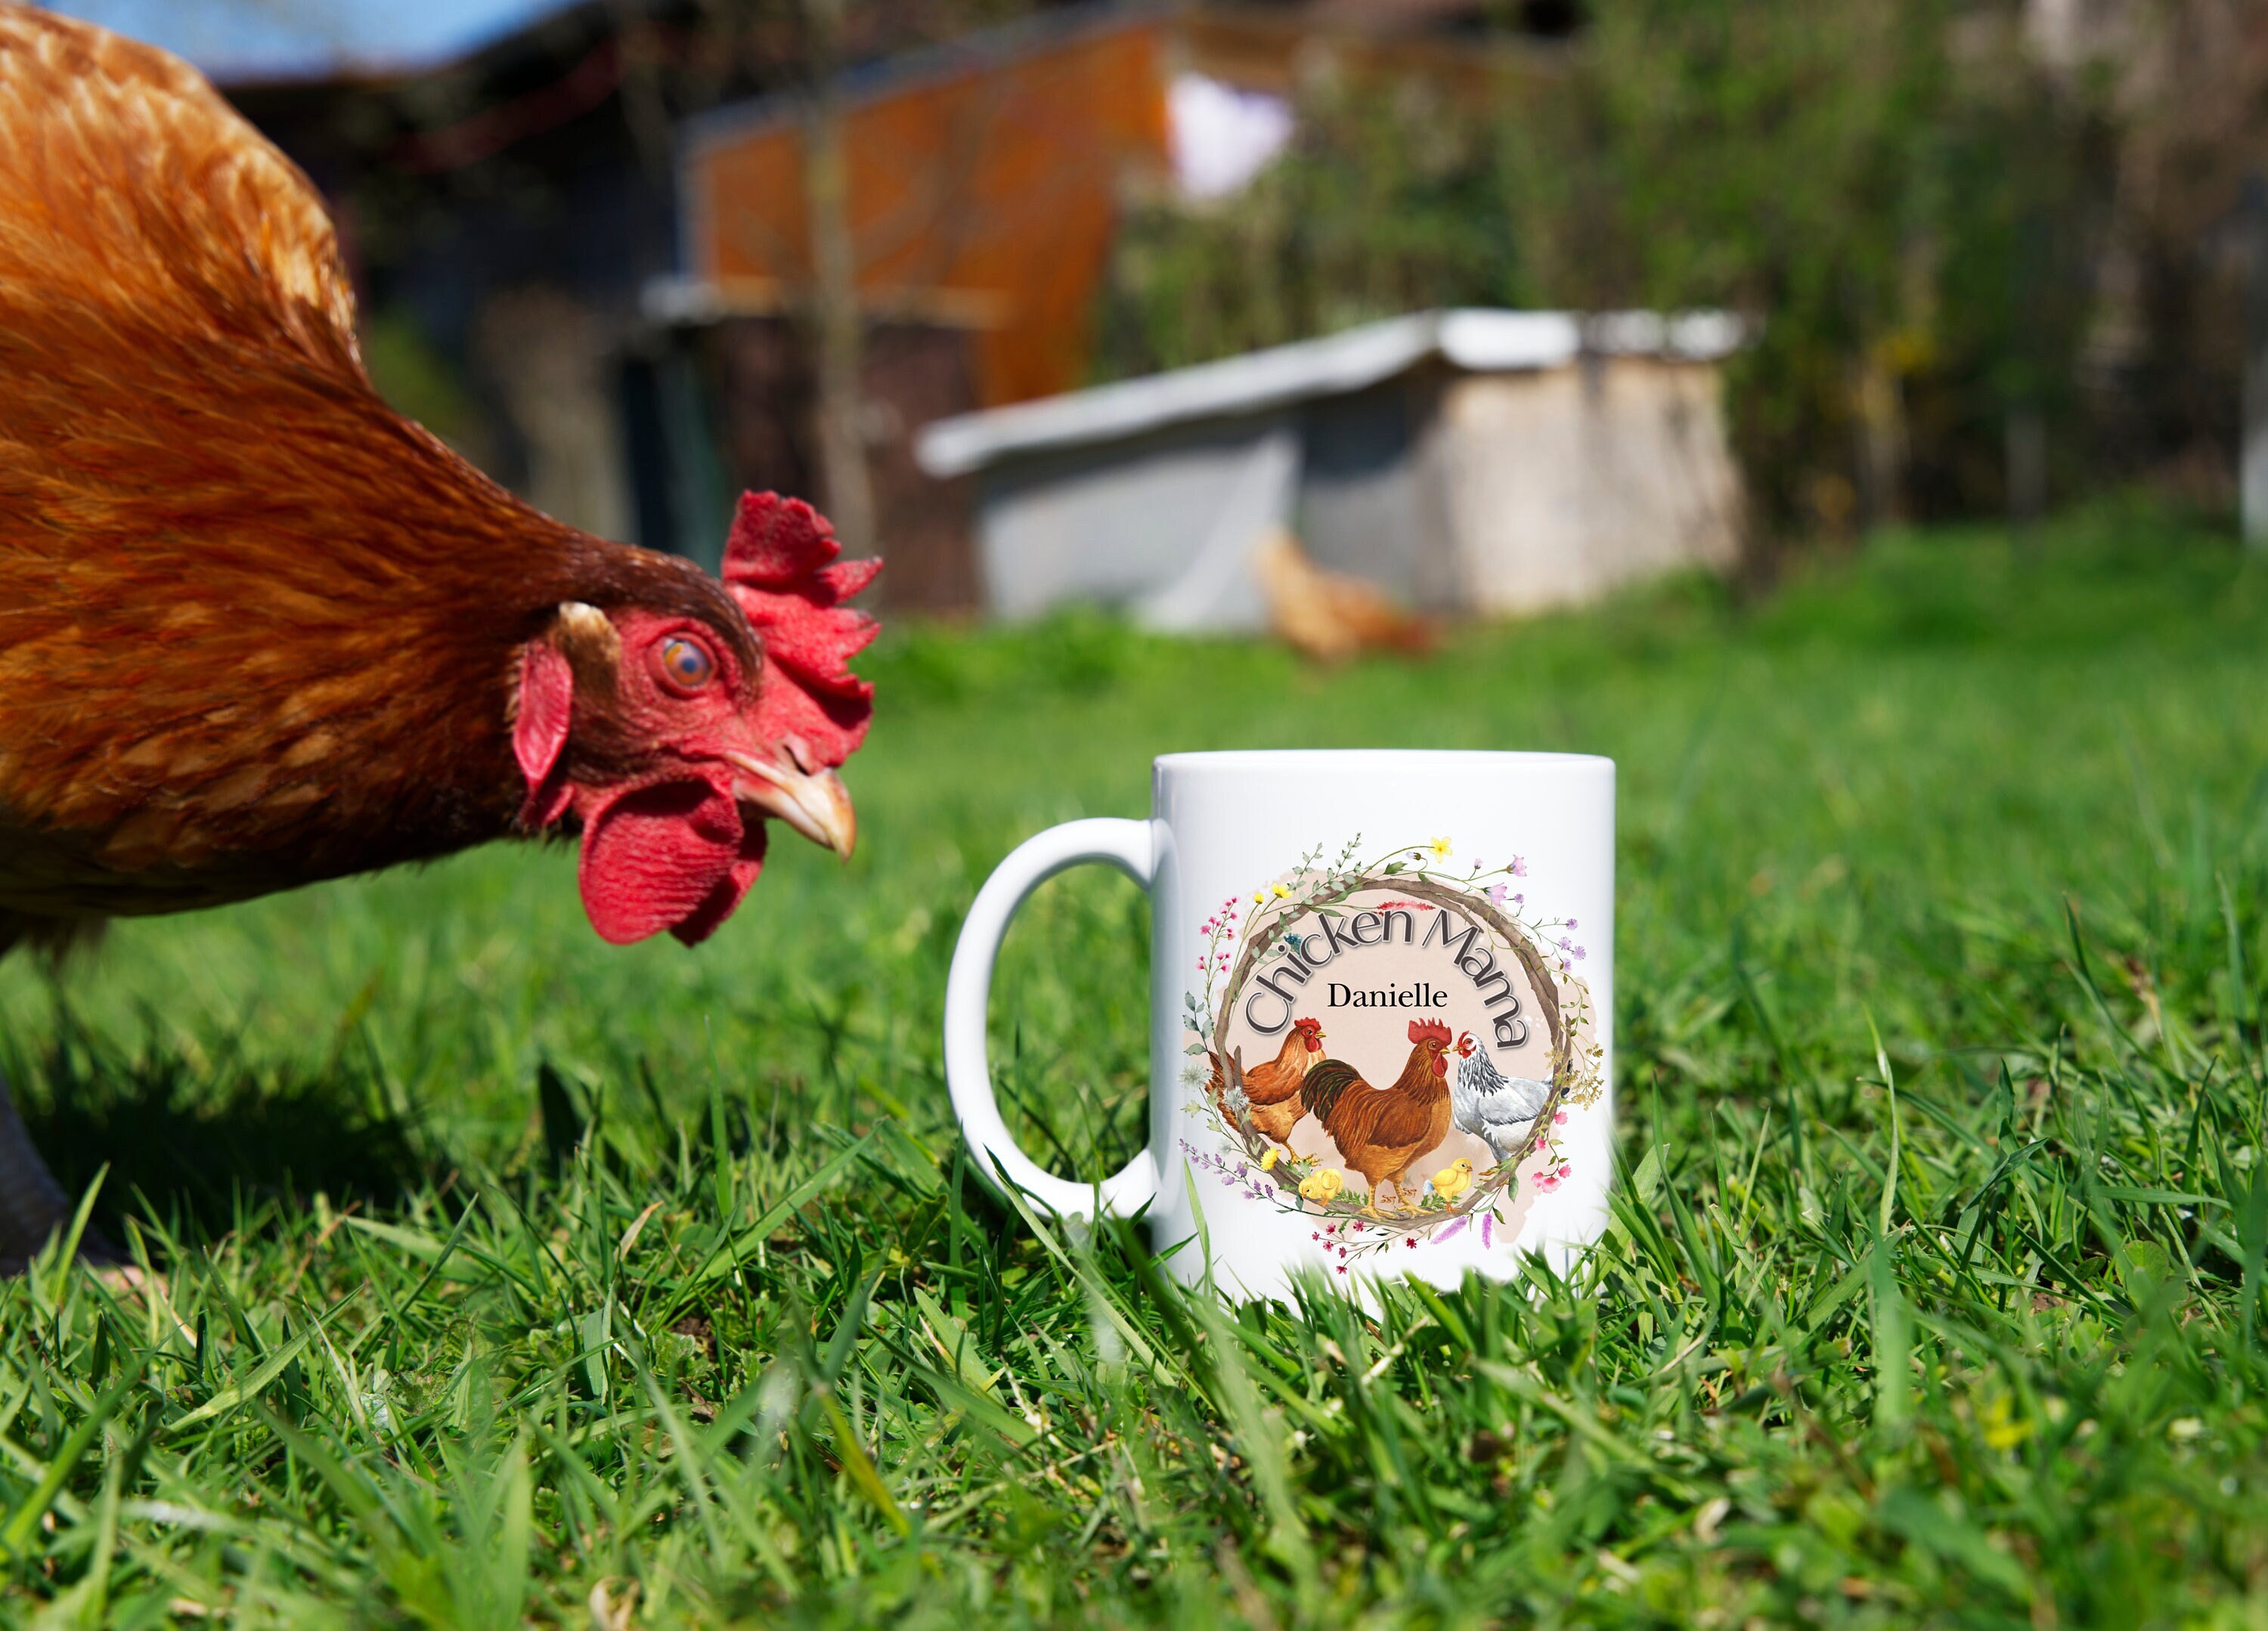 Buy Premium dear Crazy Chicken Mom Personalized Mug, Gift for